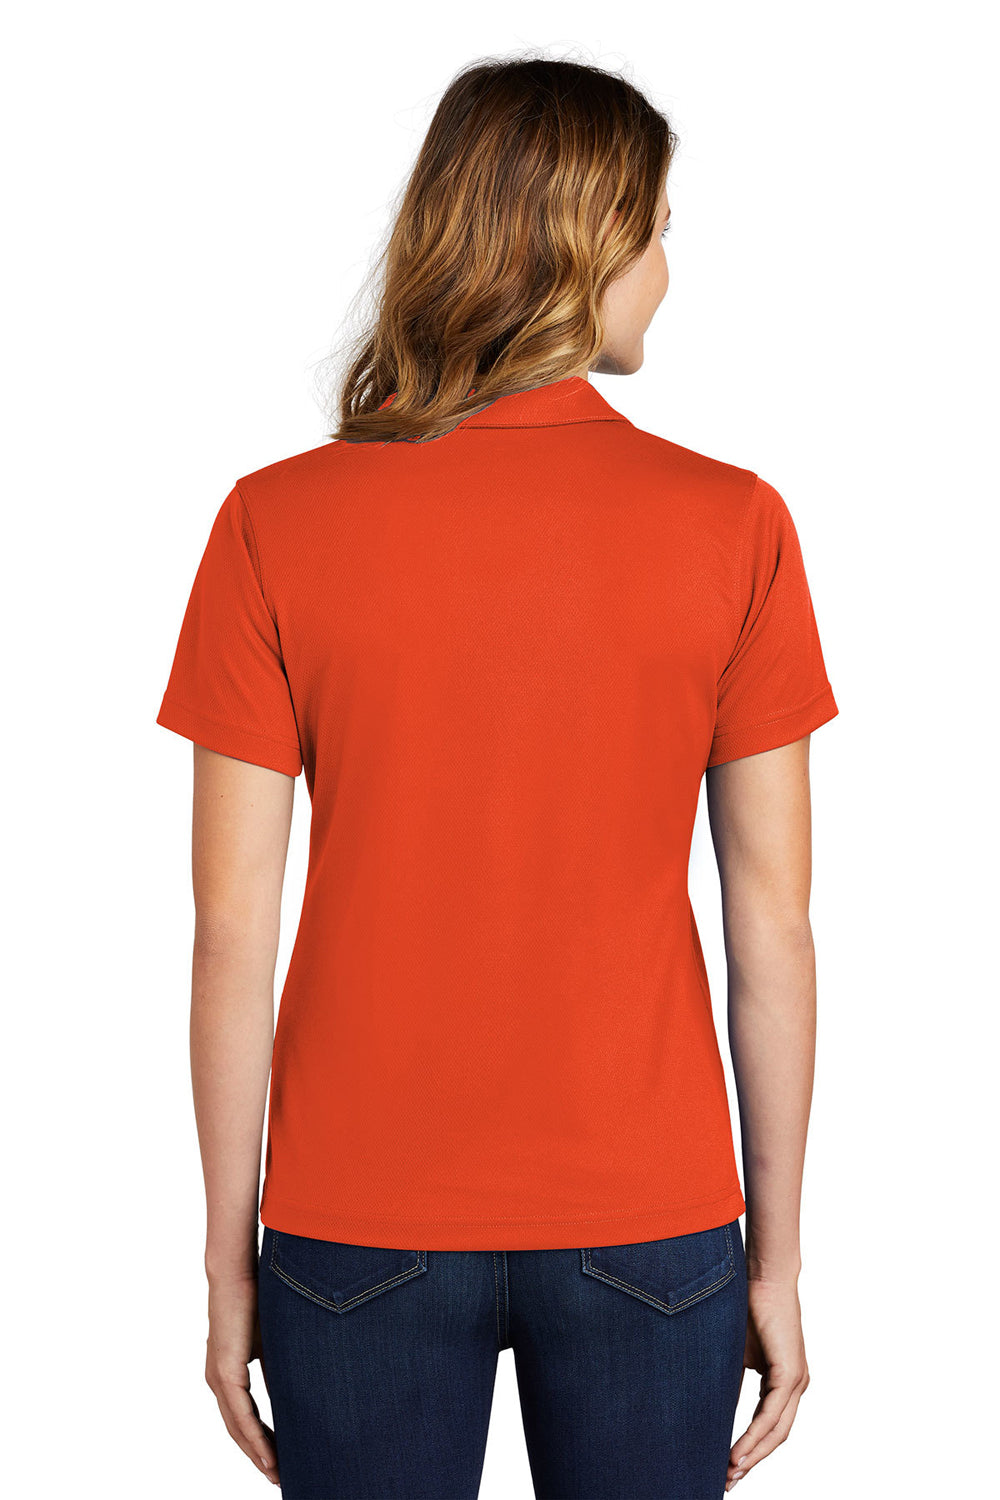 Sport-Tek L469 Womens Dri-Mesh Moisture Wicking Short Sleeve Polo Shirt Orange Back